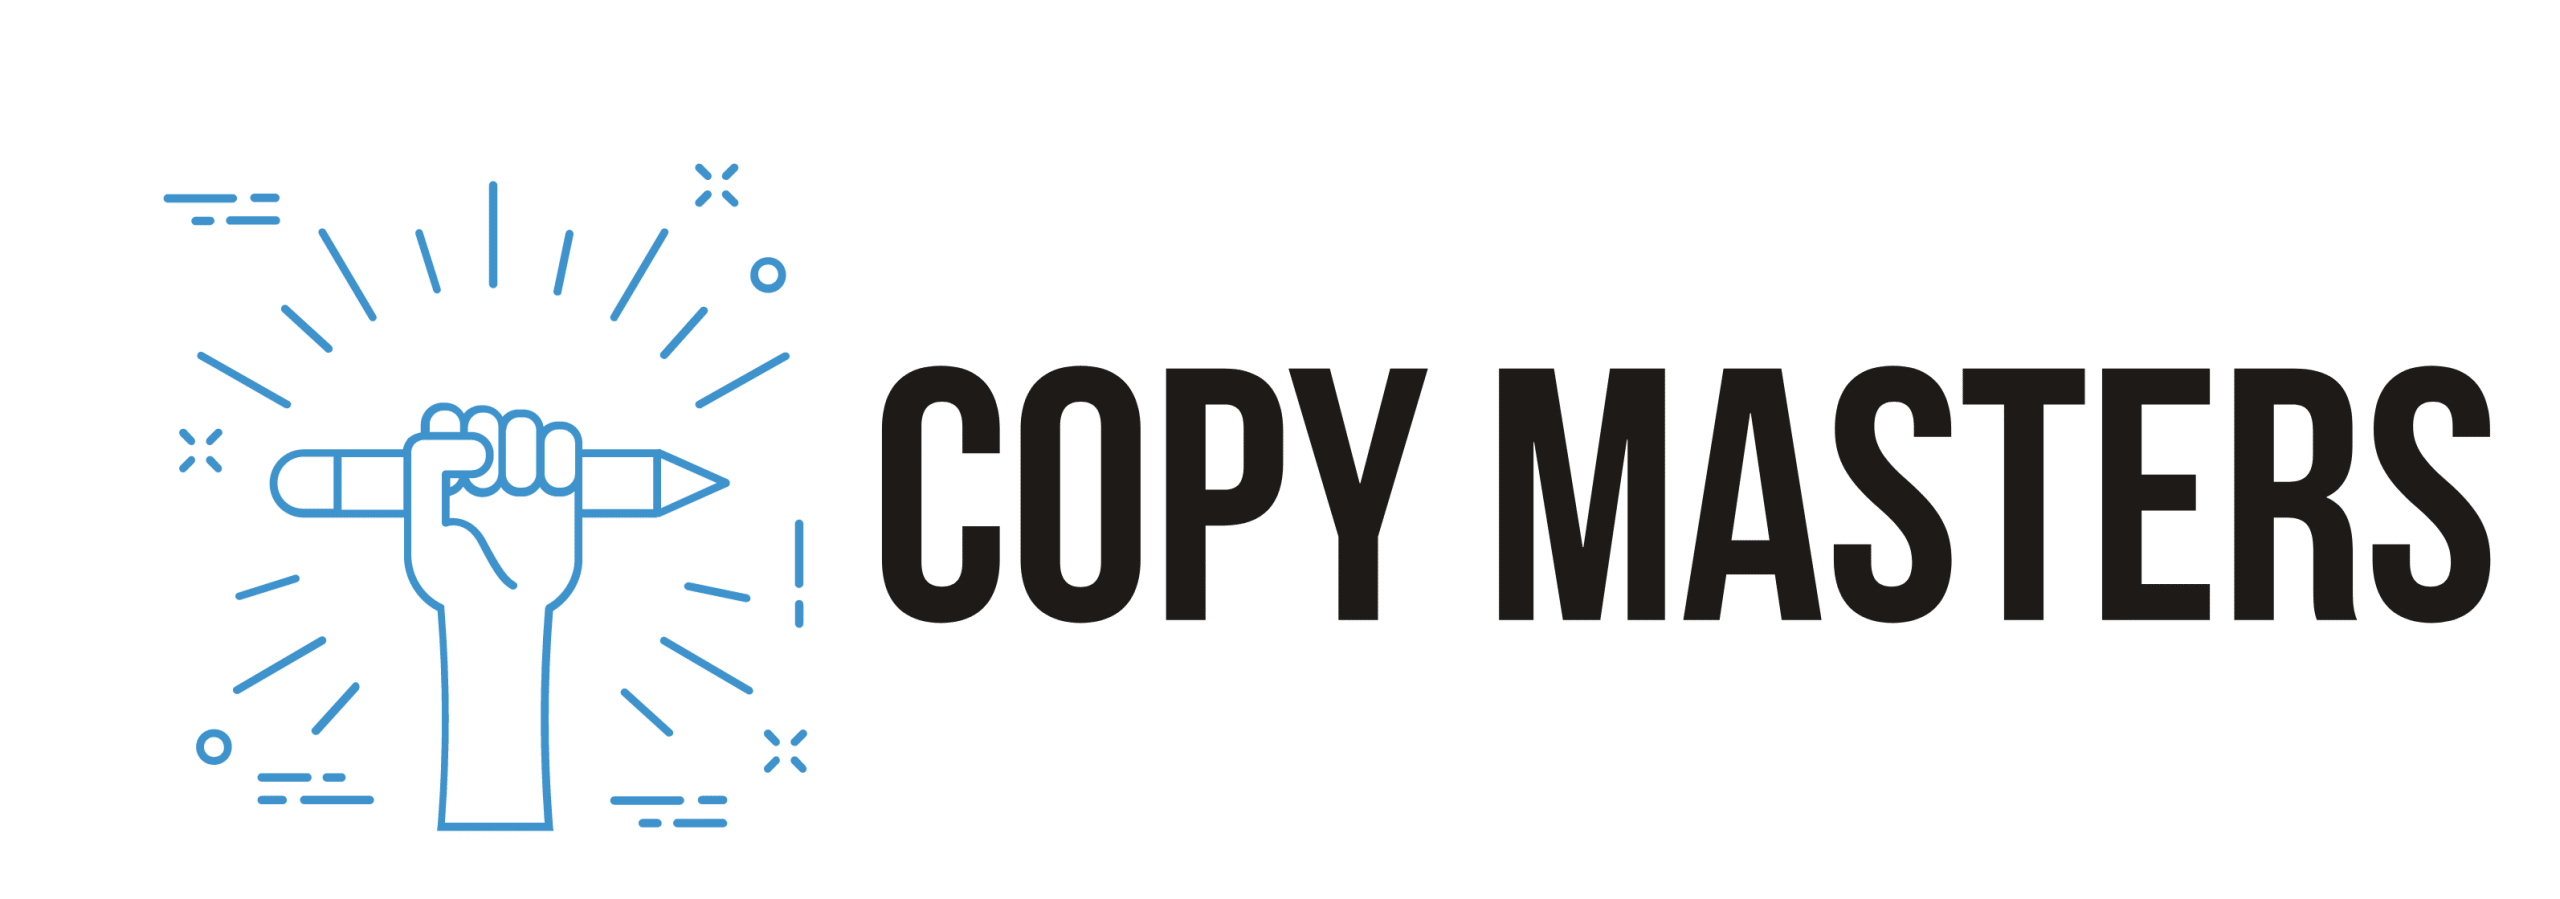 CopyMasters_Logo1